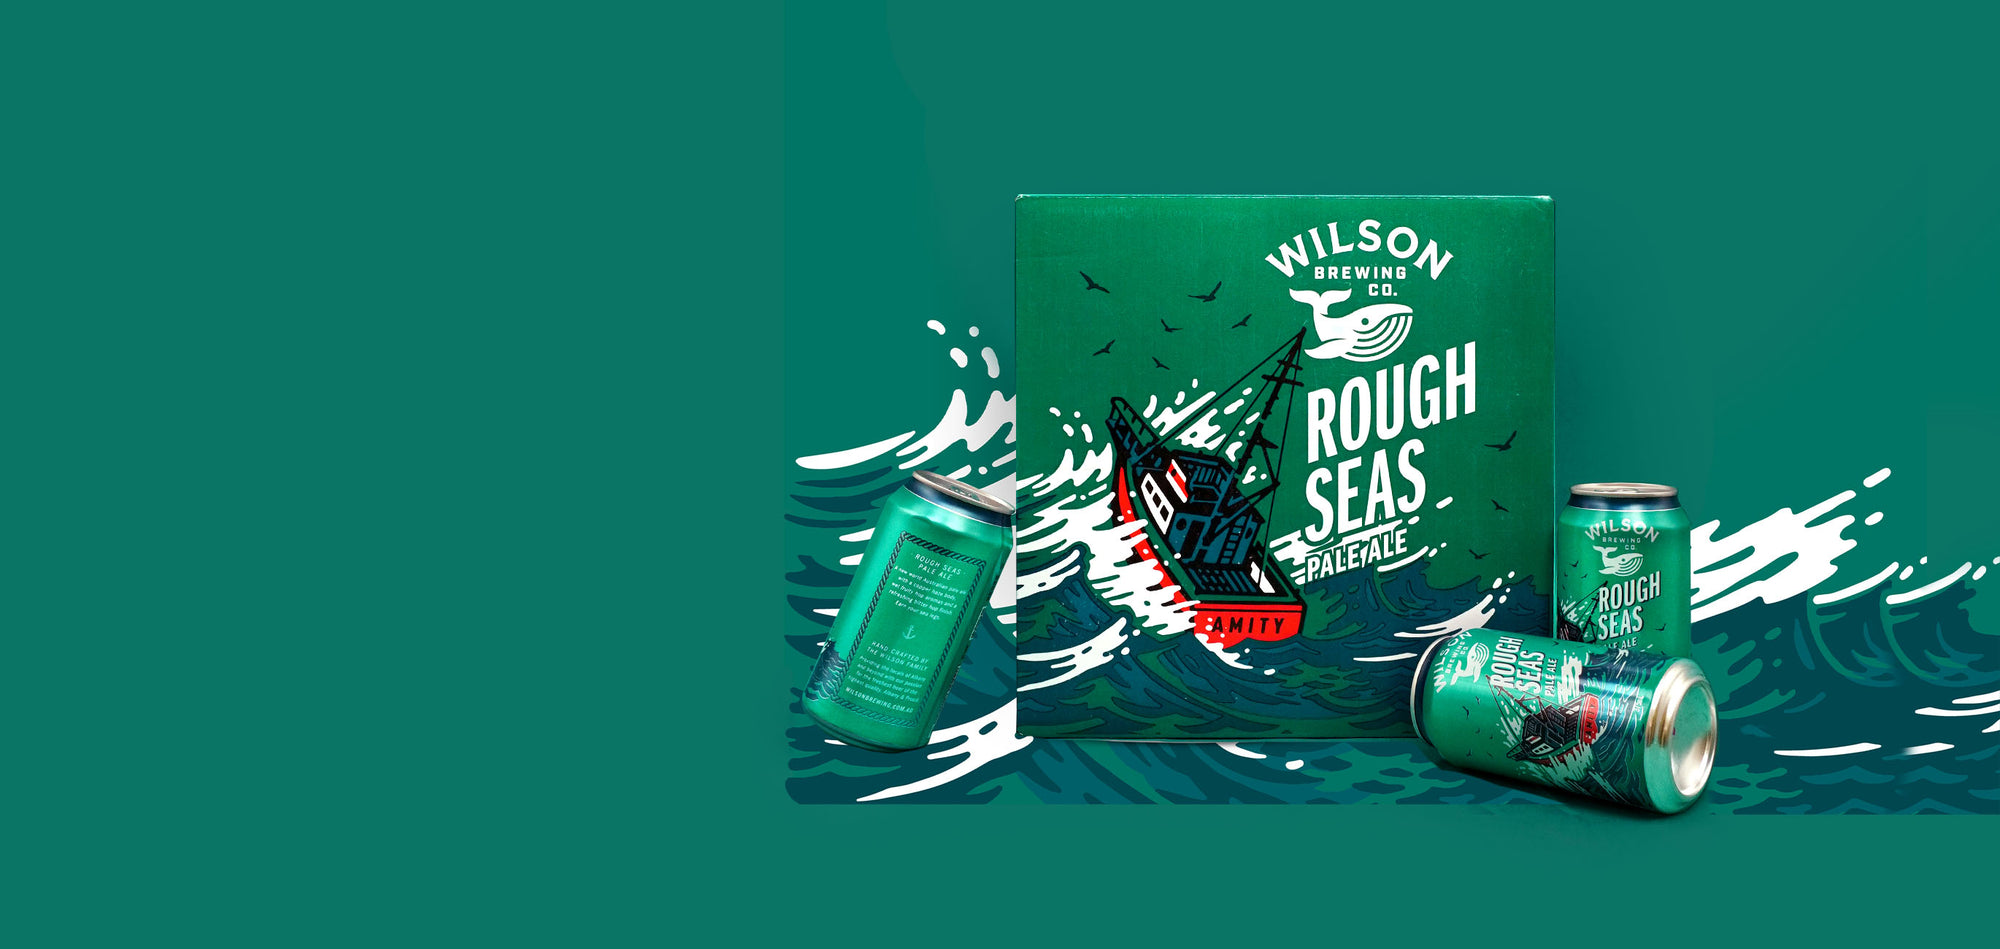 Wilson Rough Seas Pale Ale